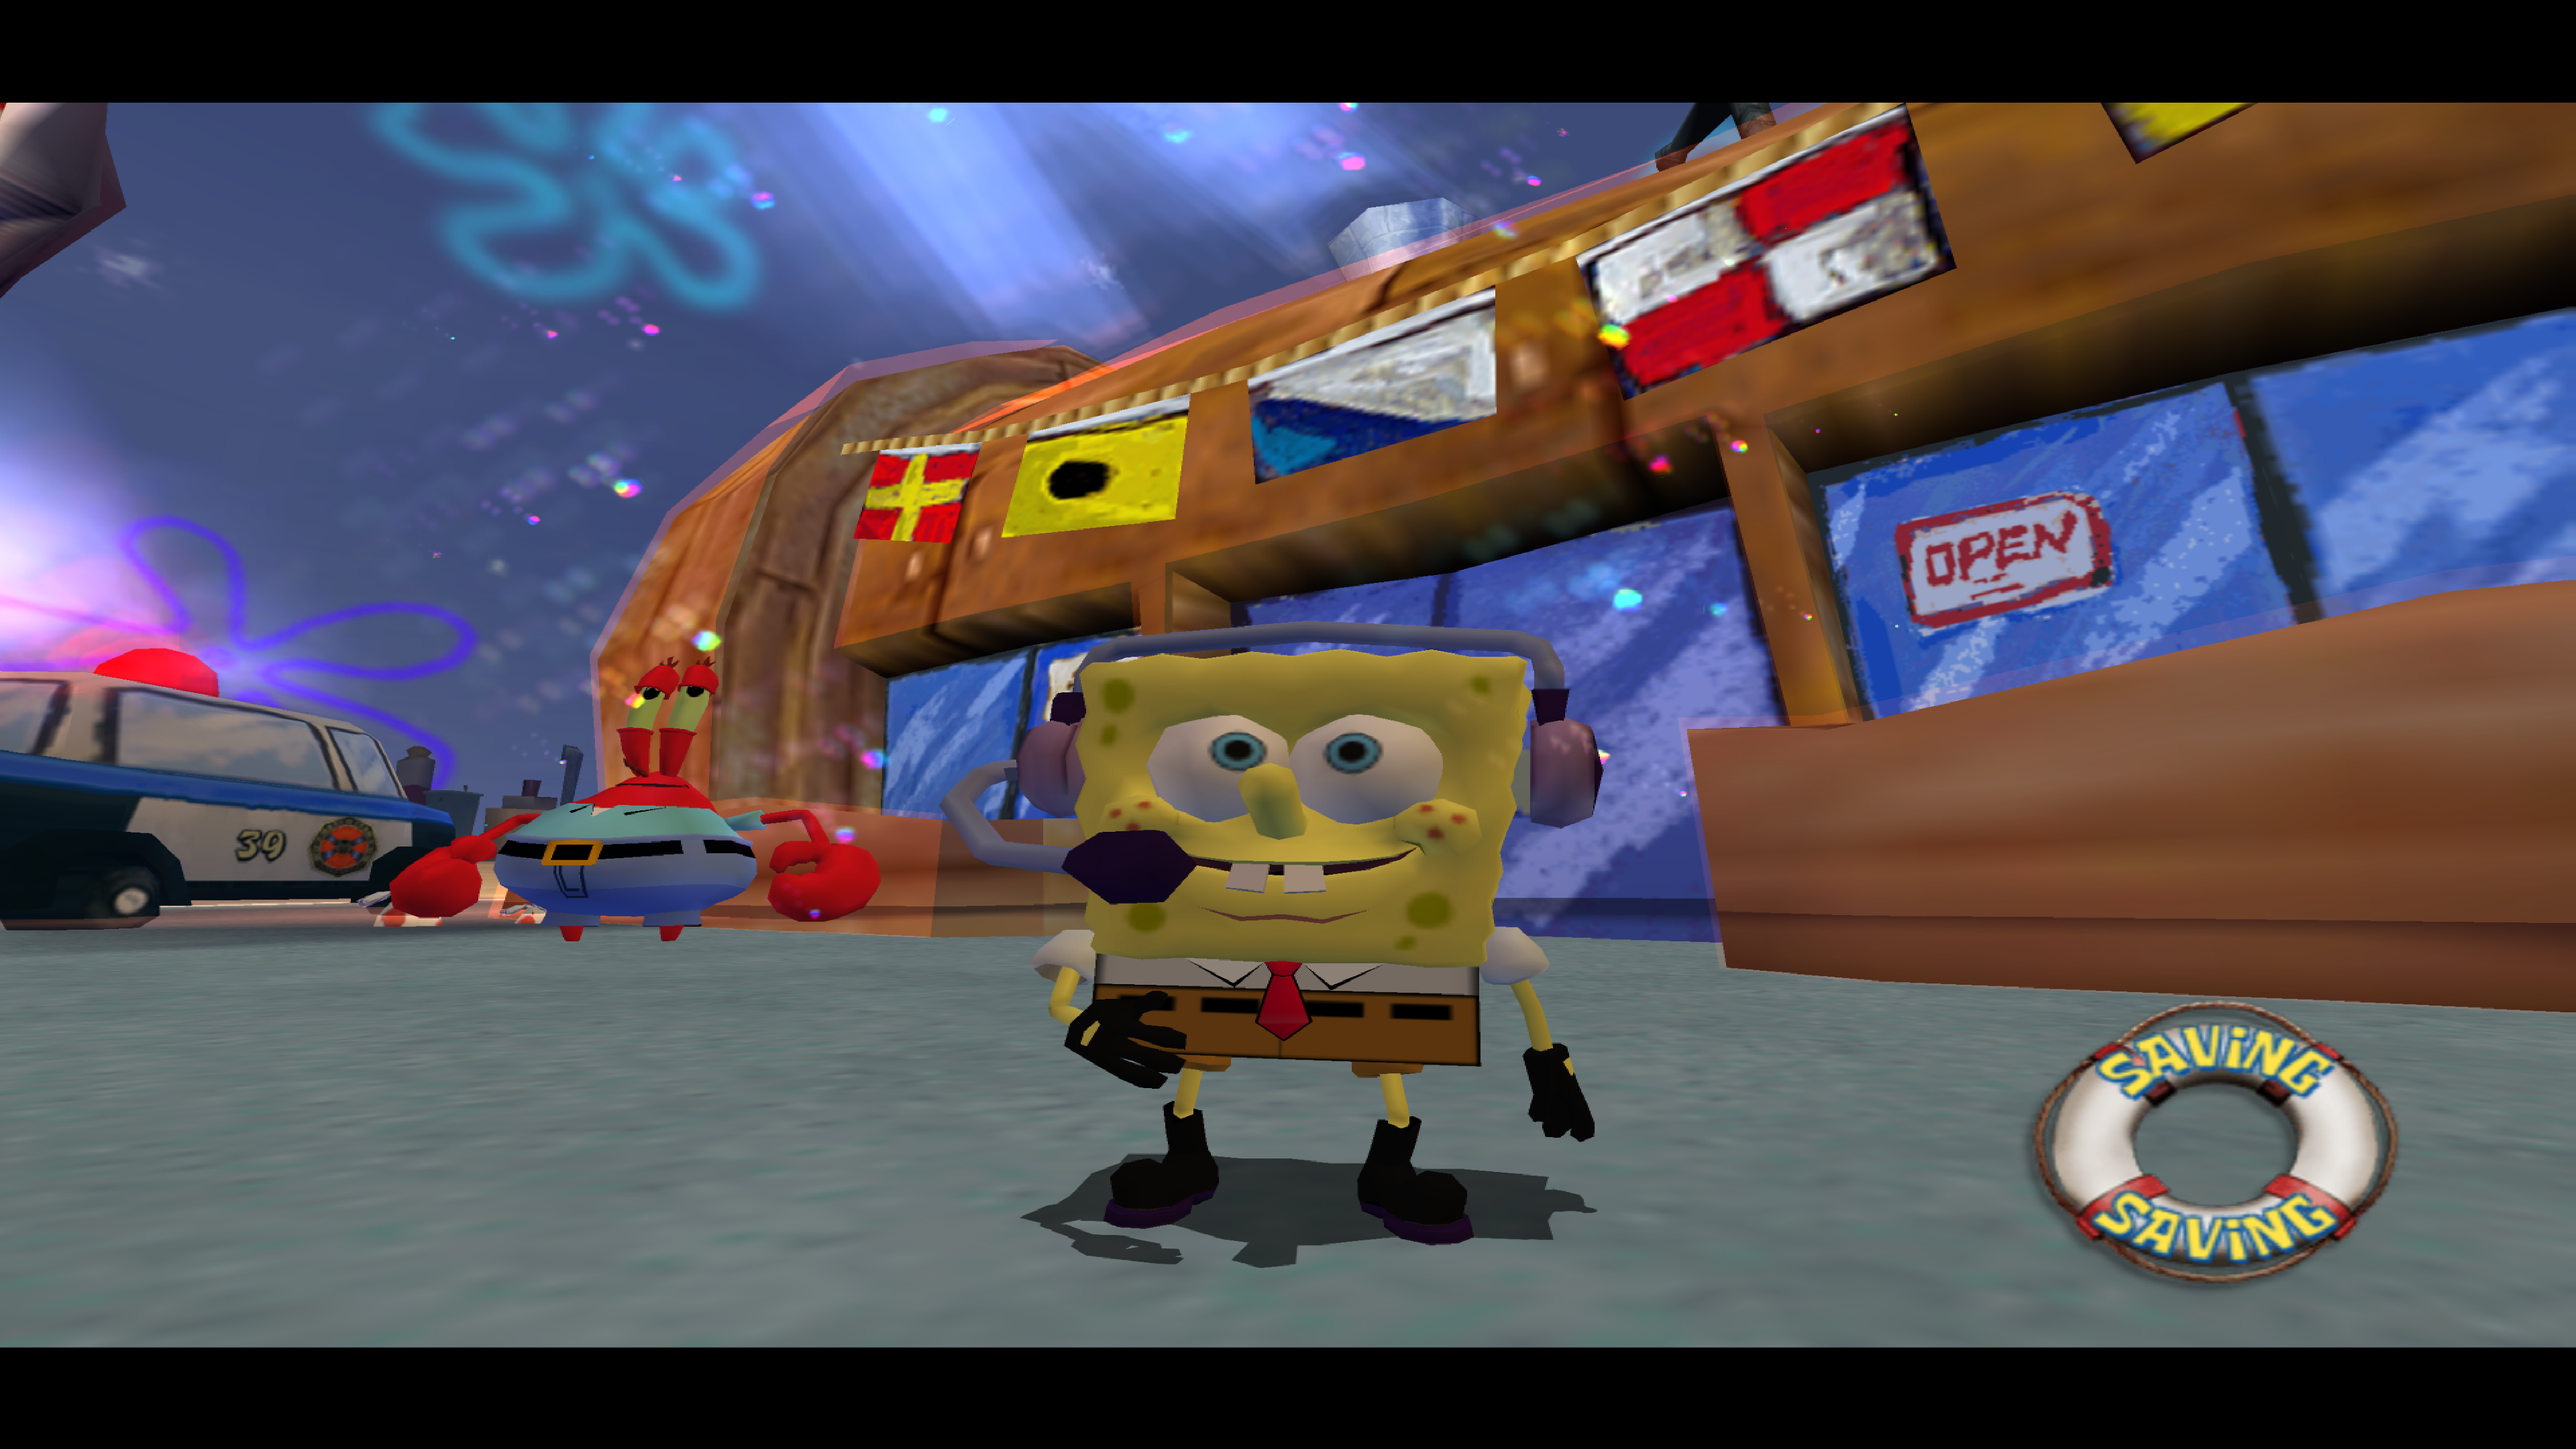 spongebob the movie game online